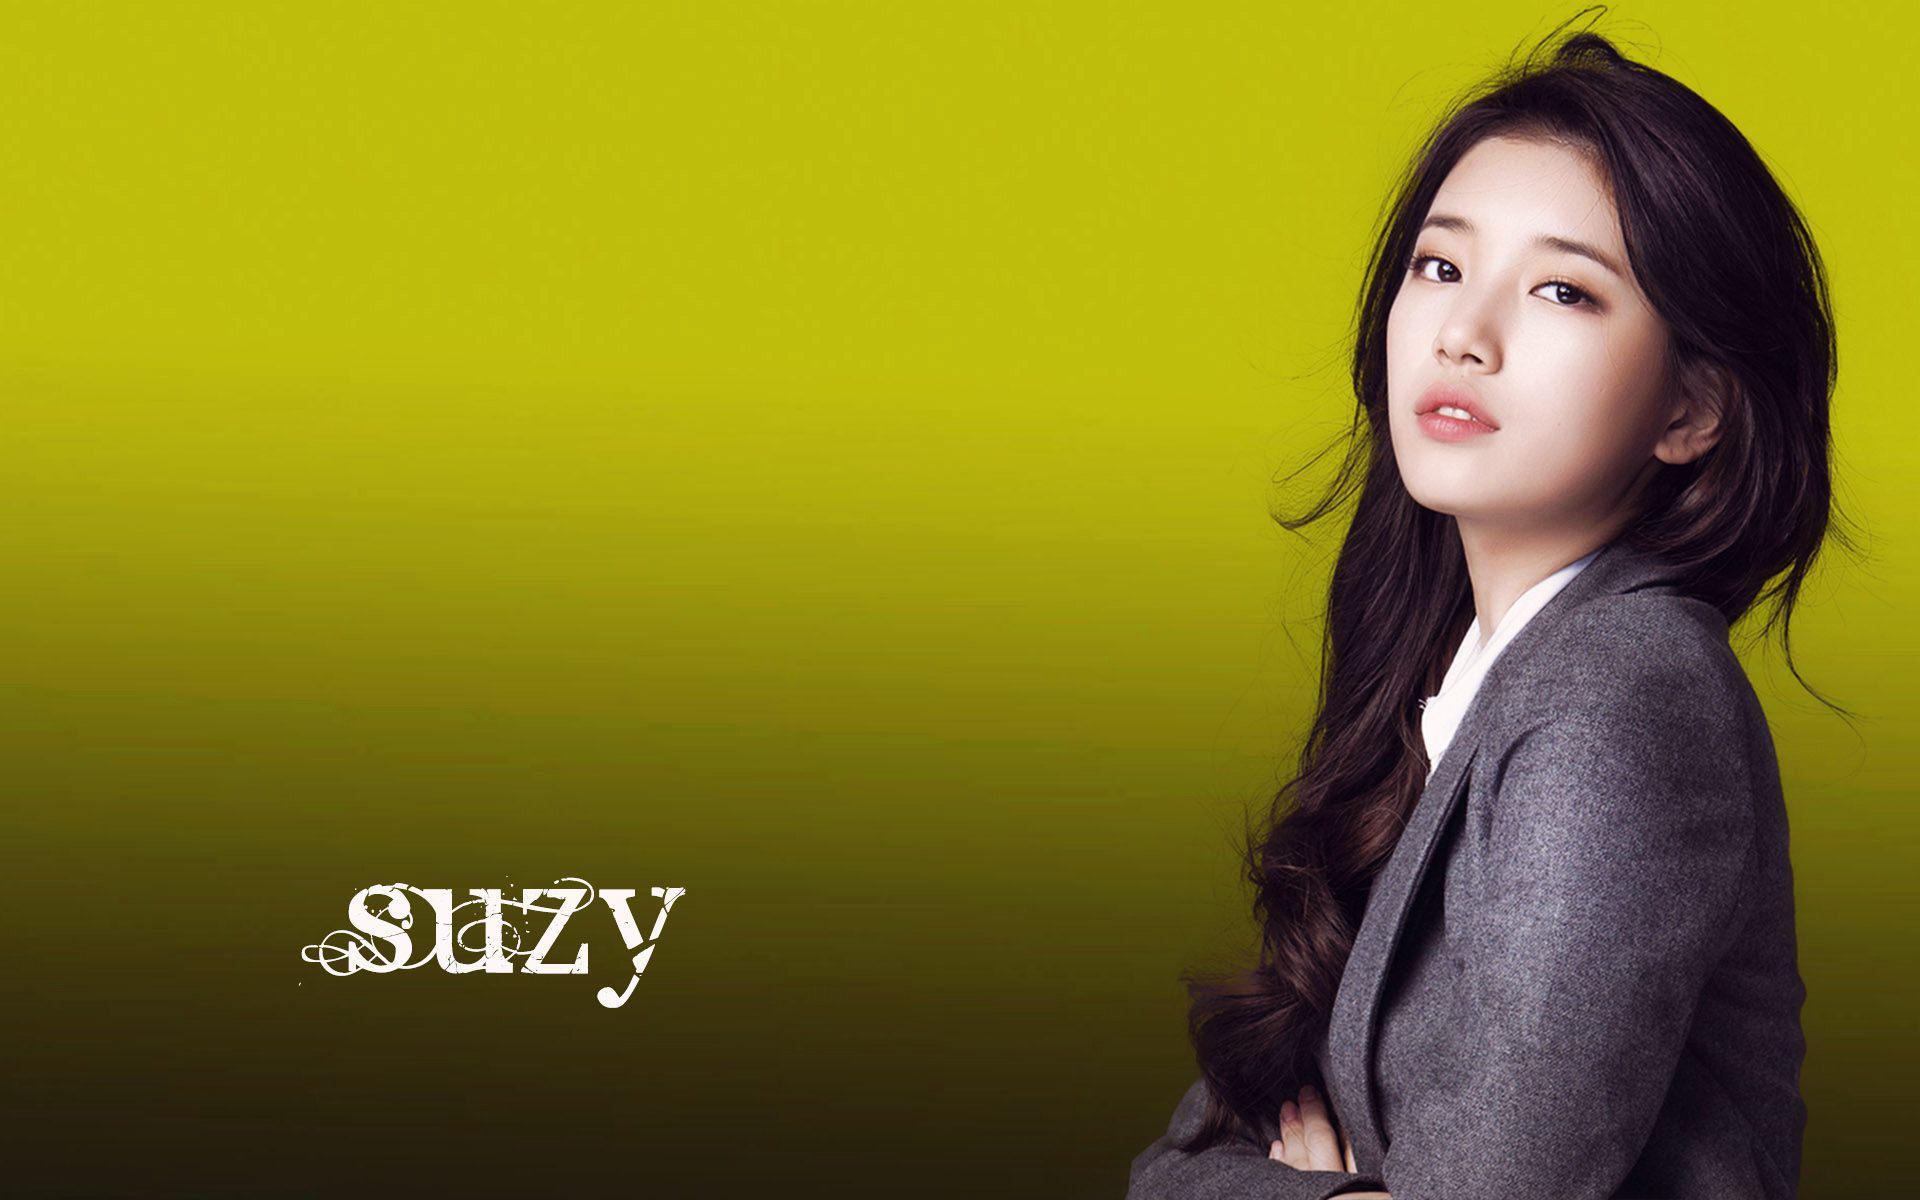 Bae Suzy  Bae Suzy hình nền 40191010  fanpop